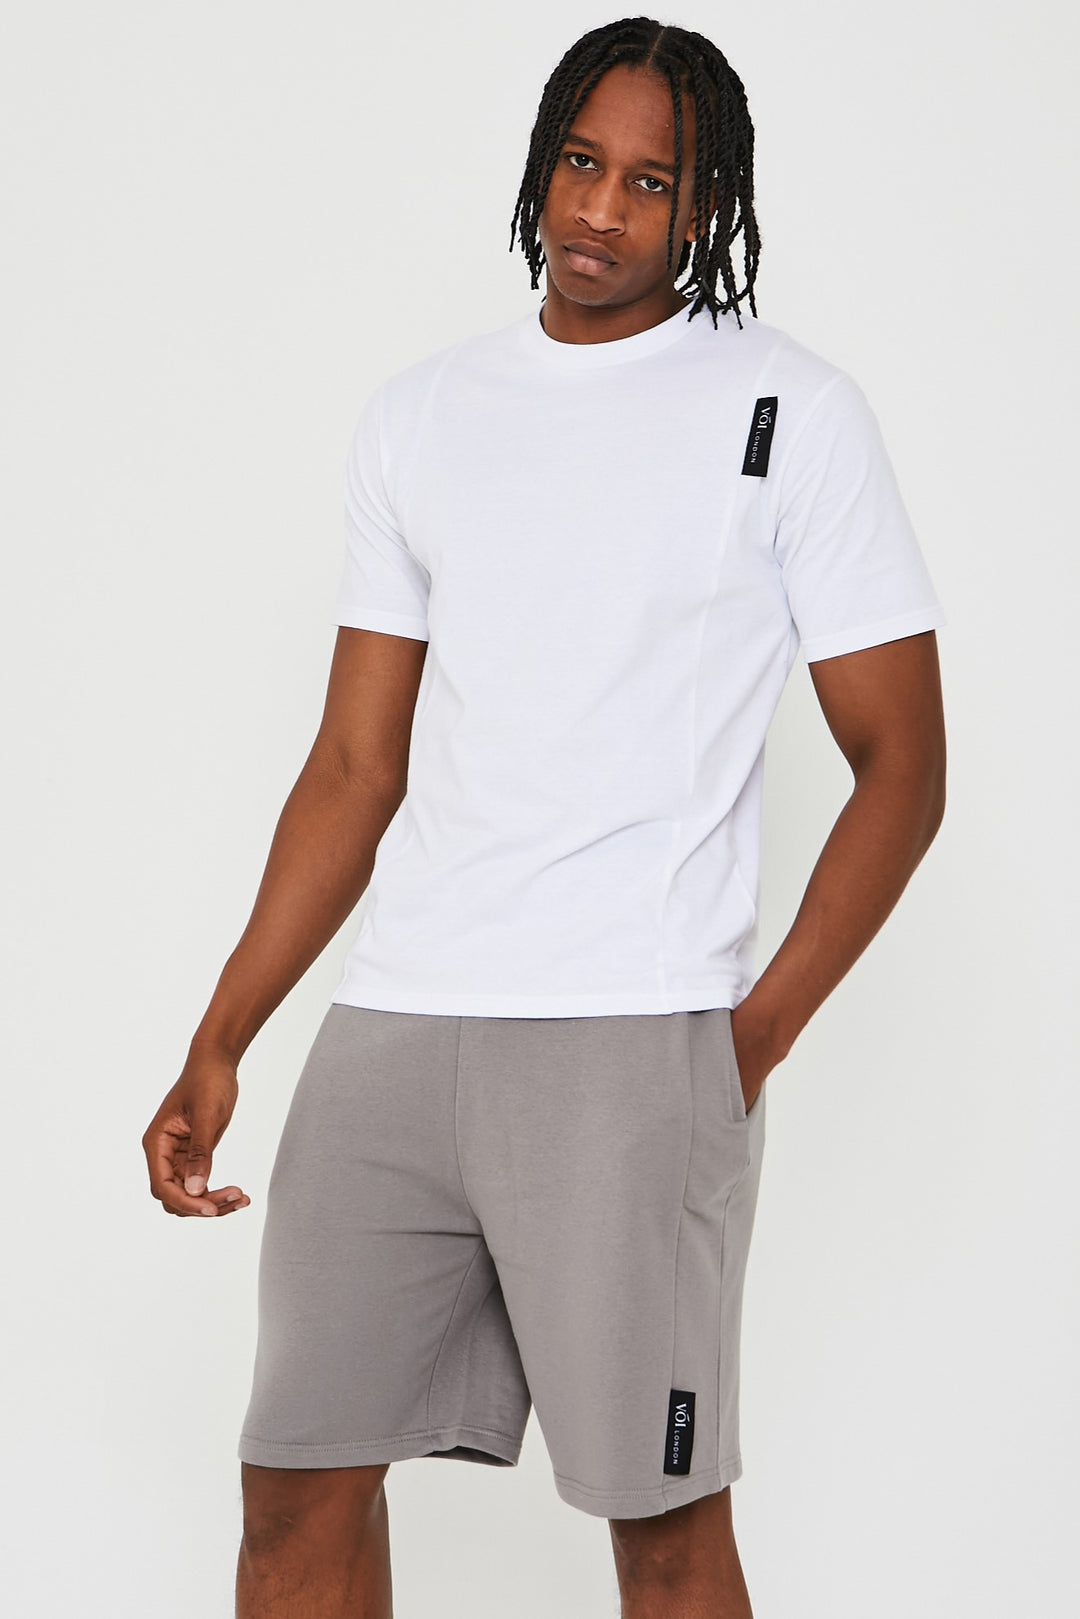 Ivy Road T-Shirt & Short Set - White / Grey